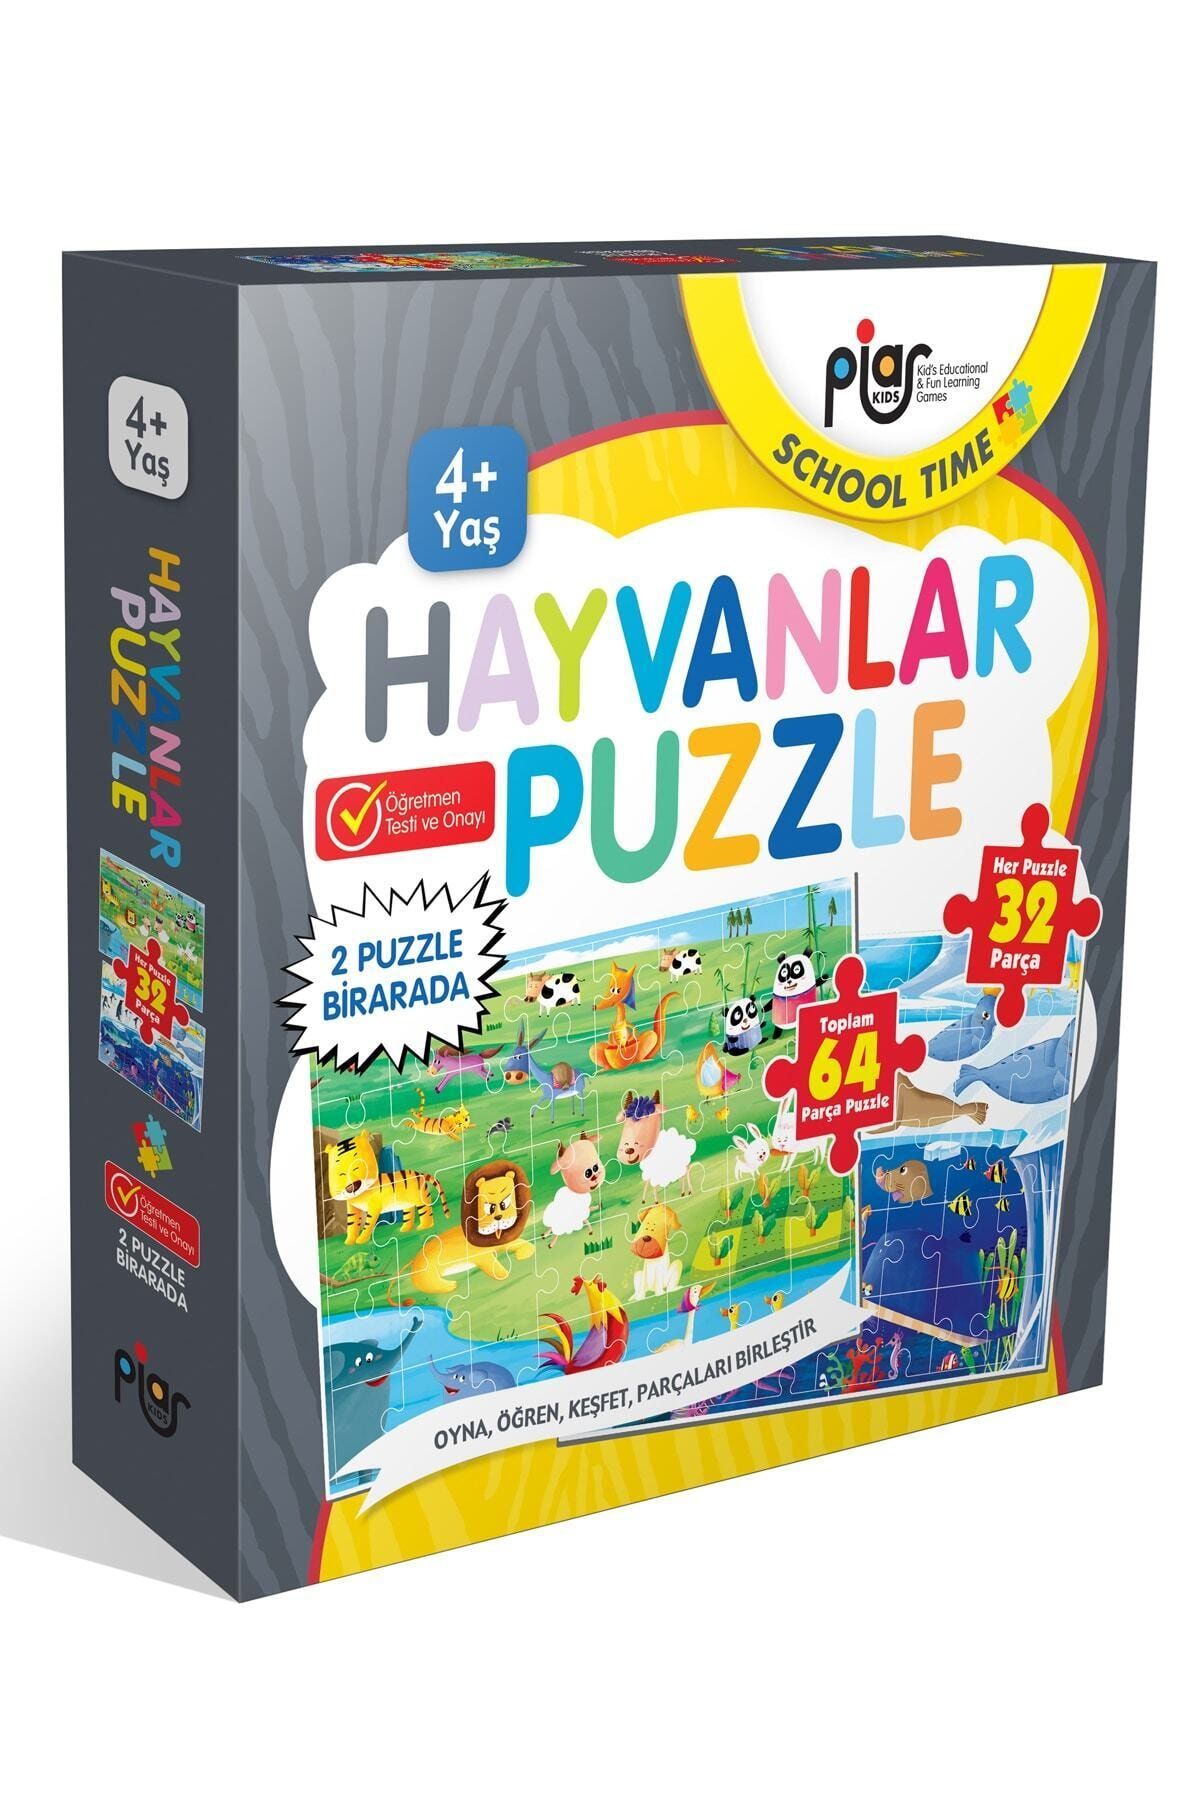 Piar Kids Hayvanlar Puzzle / 64 Parça Puzzle / 2 Puzzle Bir Arada / 4+ Yaş